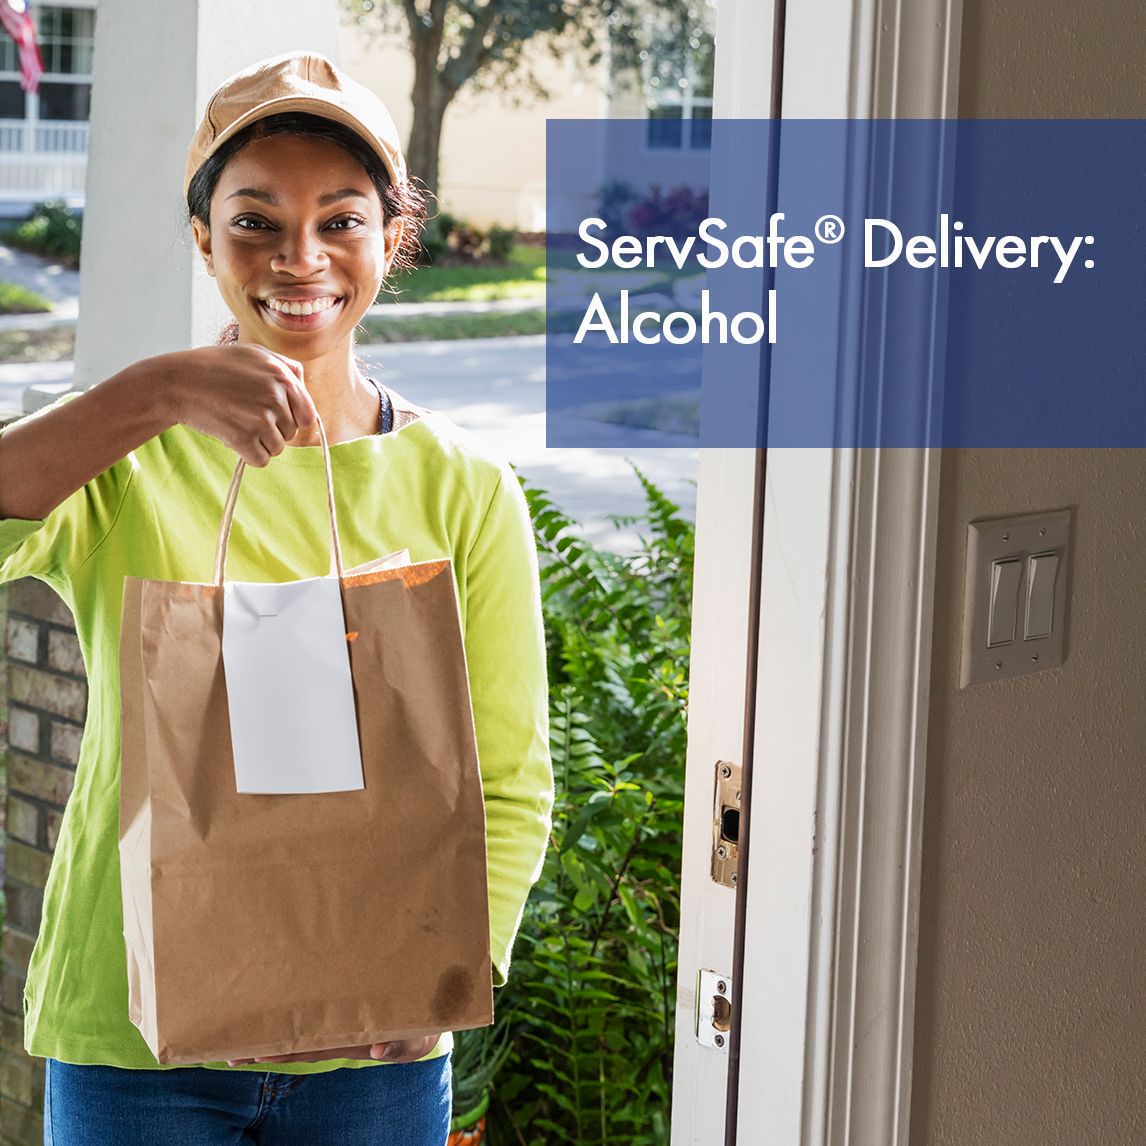 click to see details for ServSafe Delivery: Alcohol